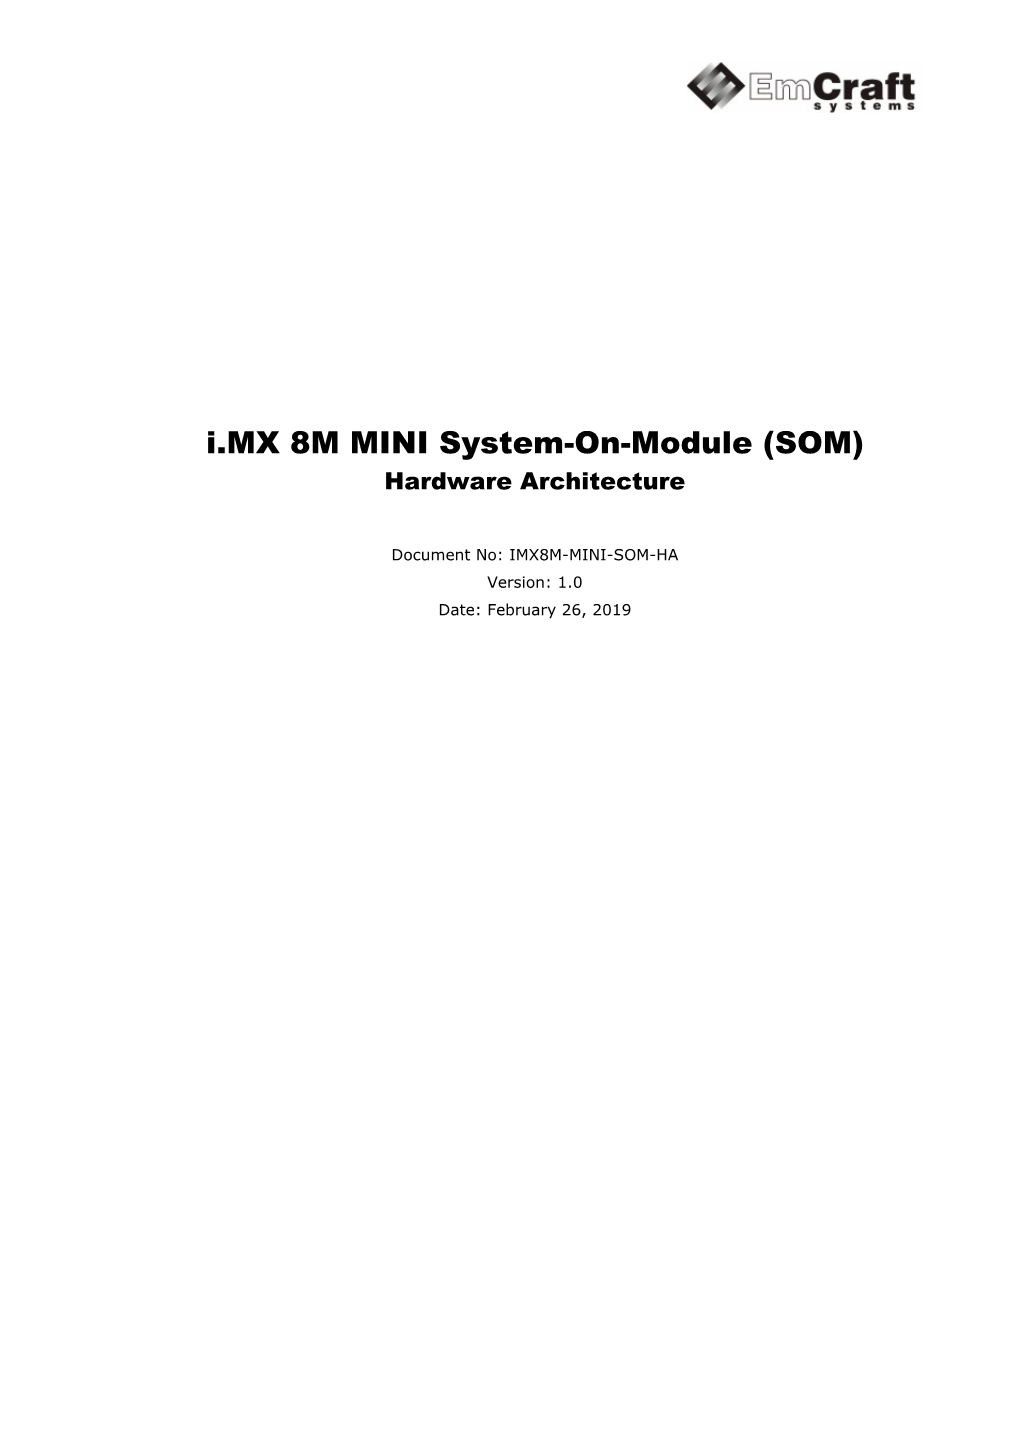 I.MX 8M MINI System-On-Module (SOM) Hardware Architecture